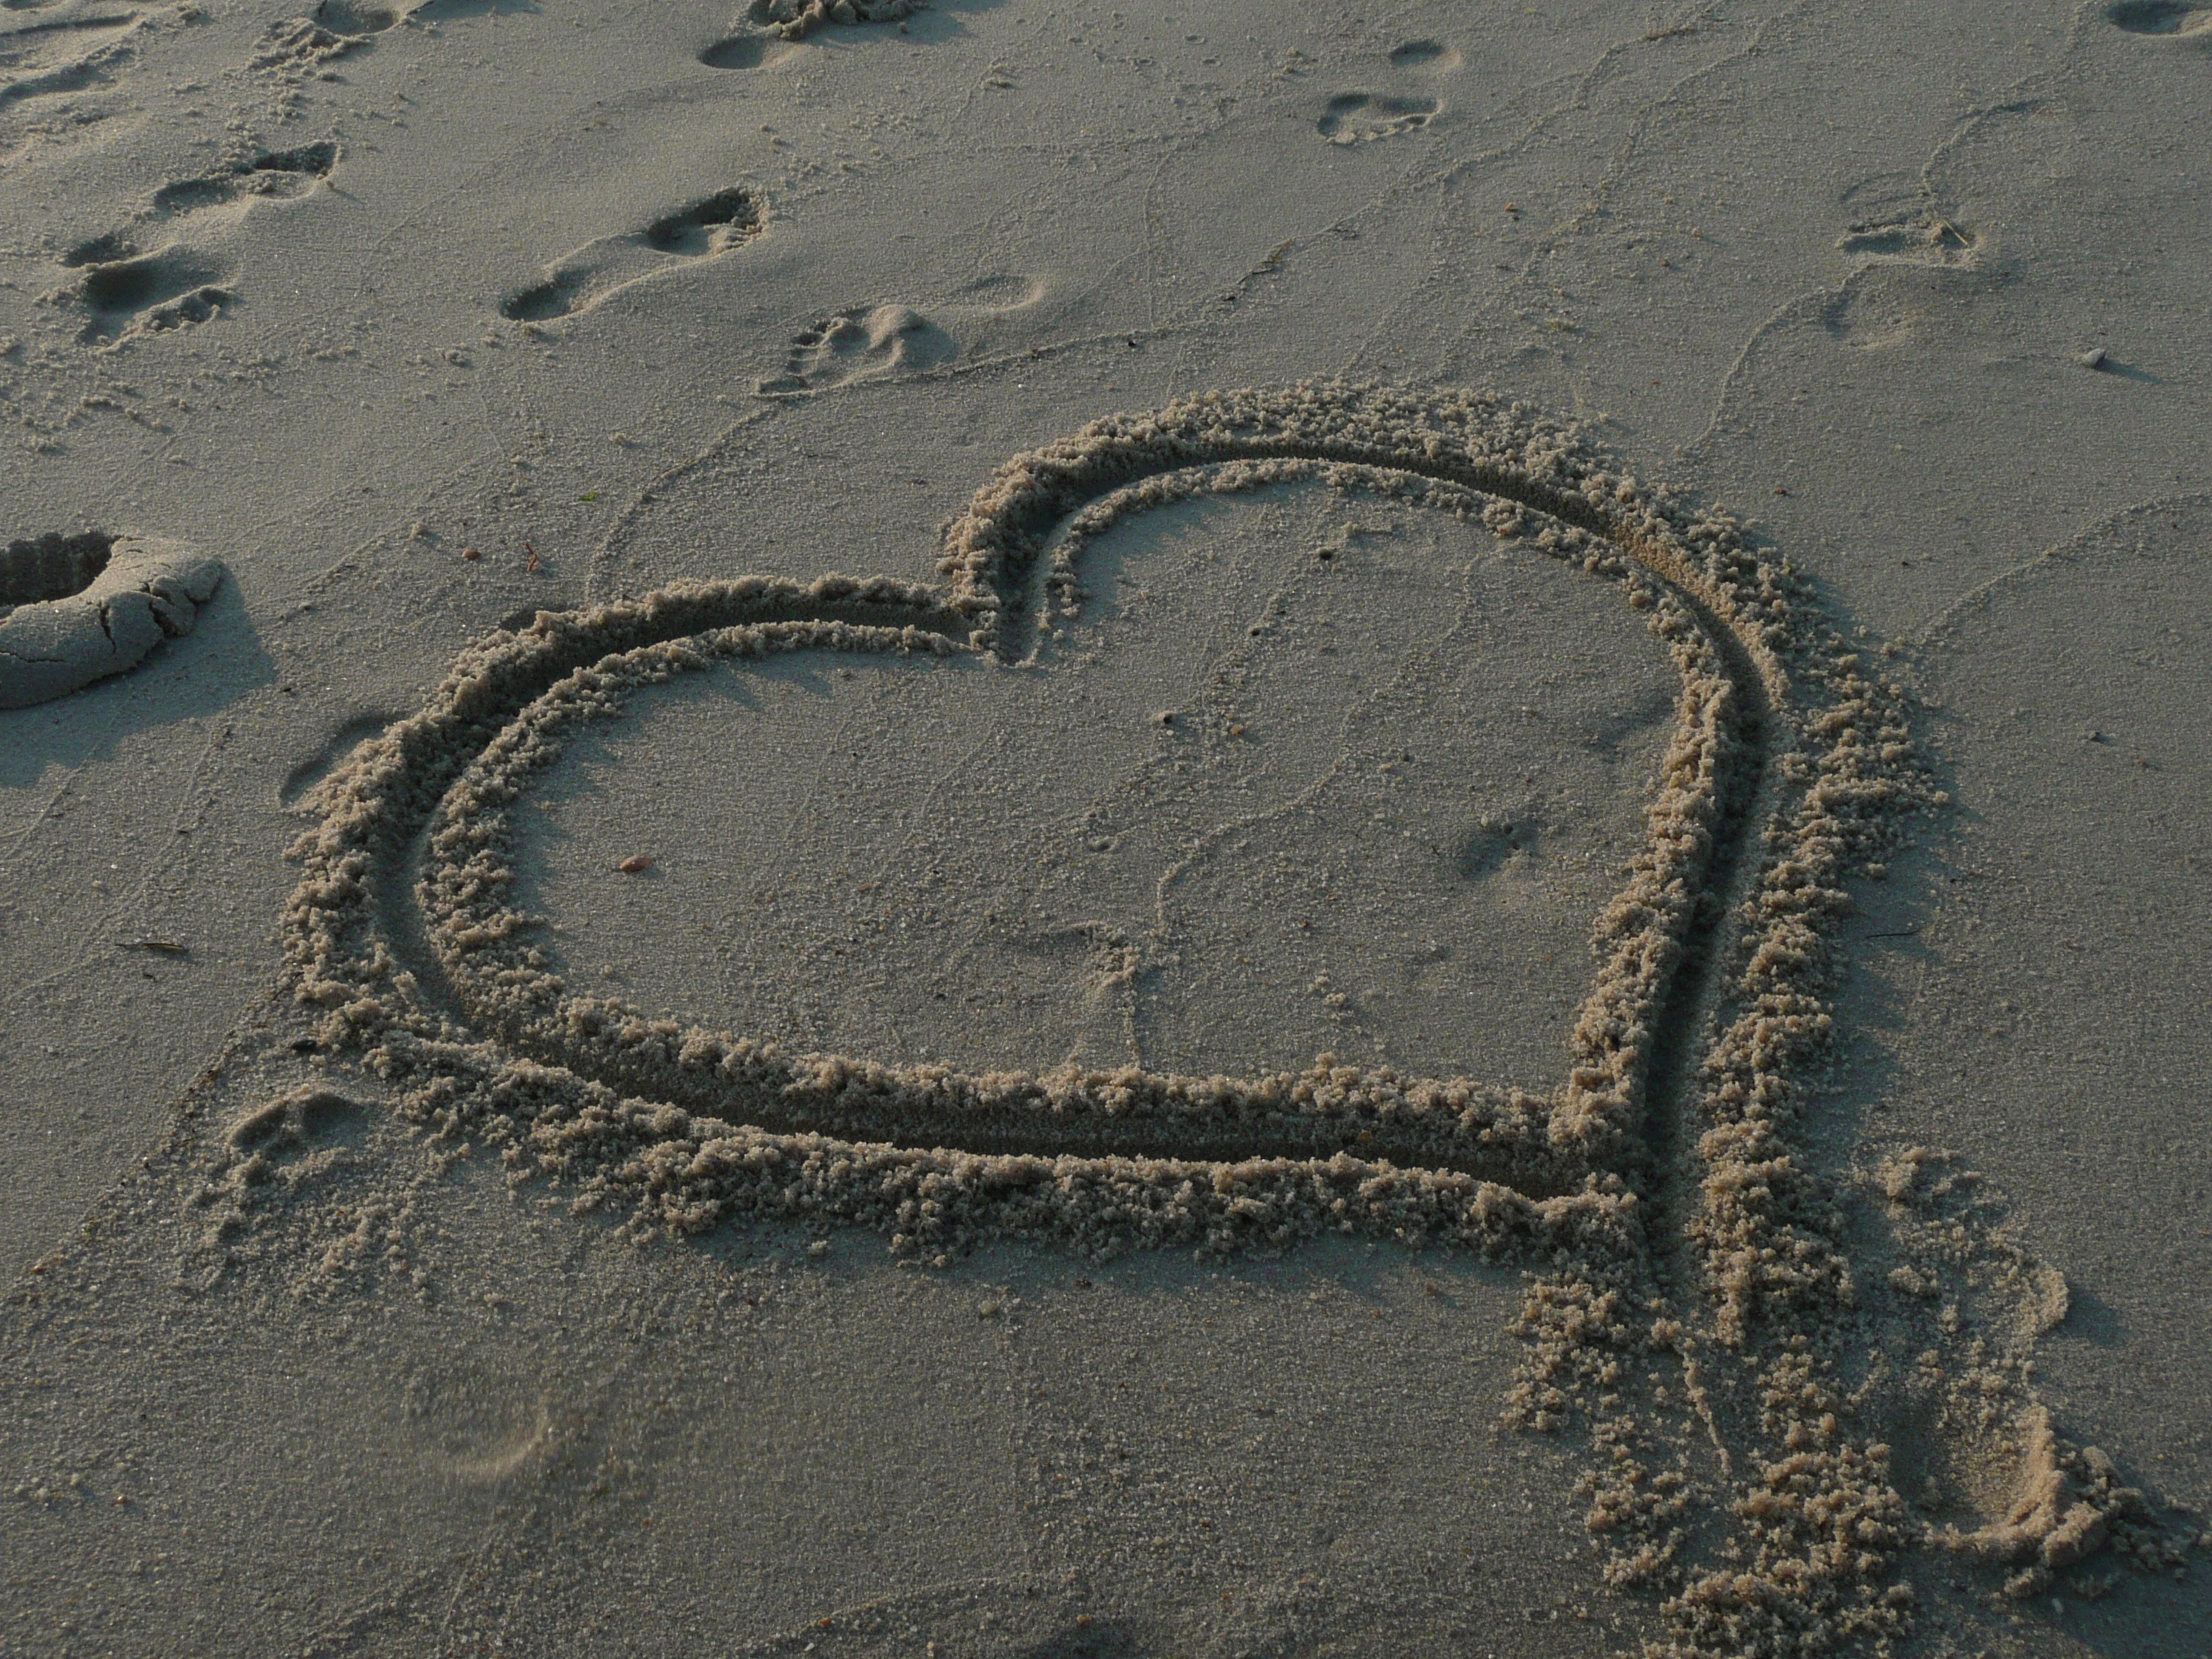 A heart on the sandy shore of the beach